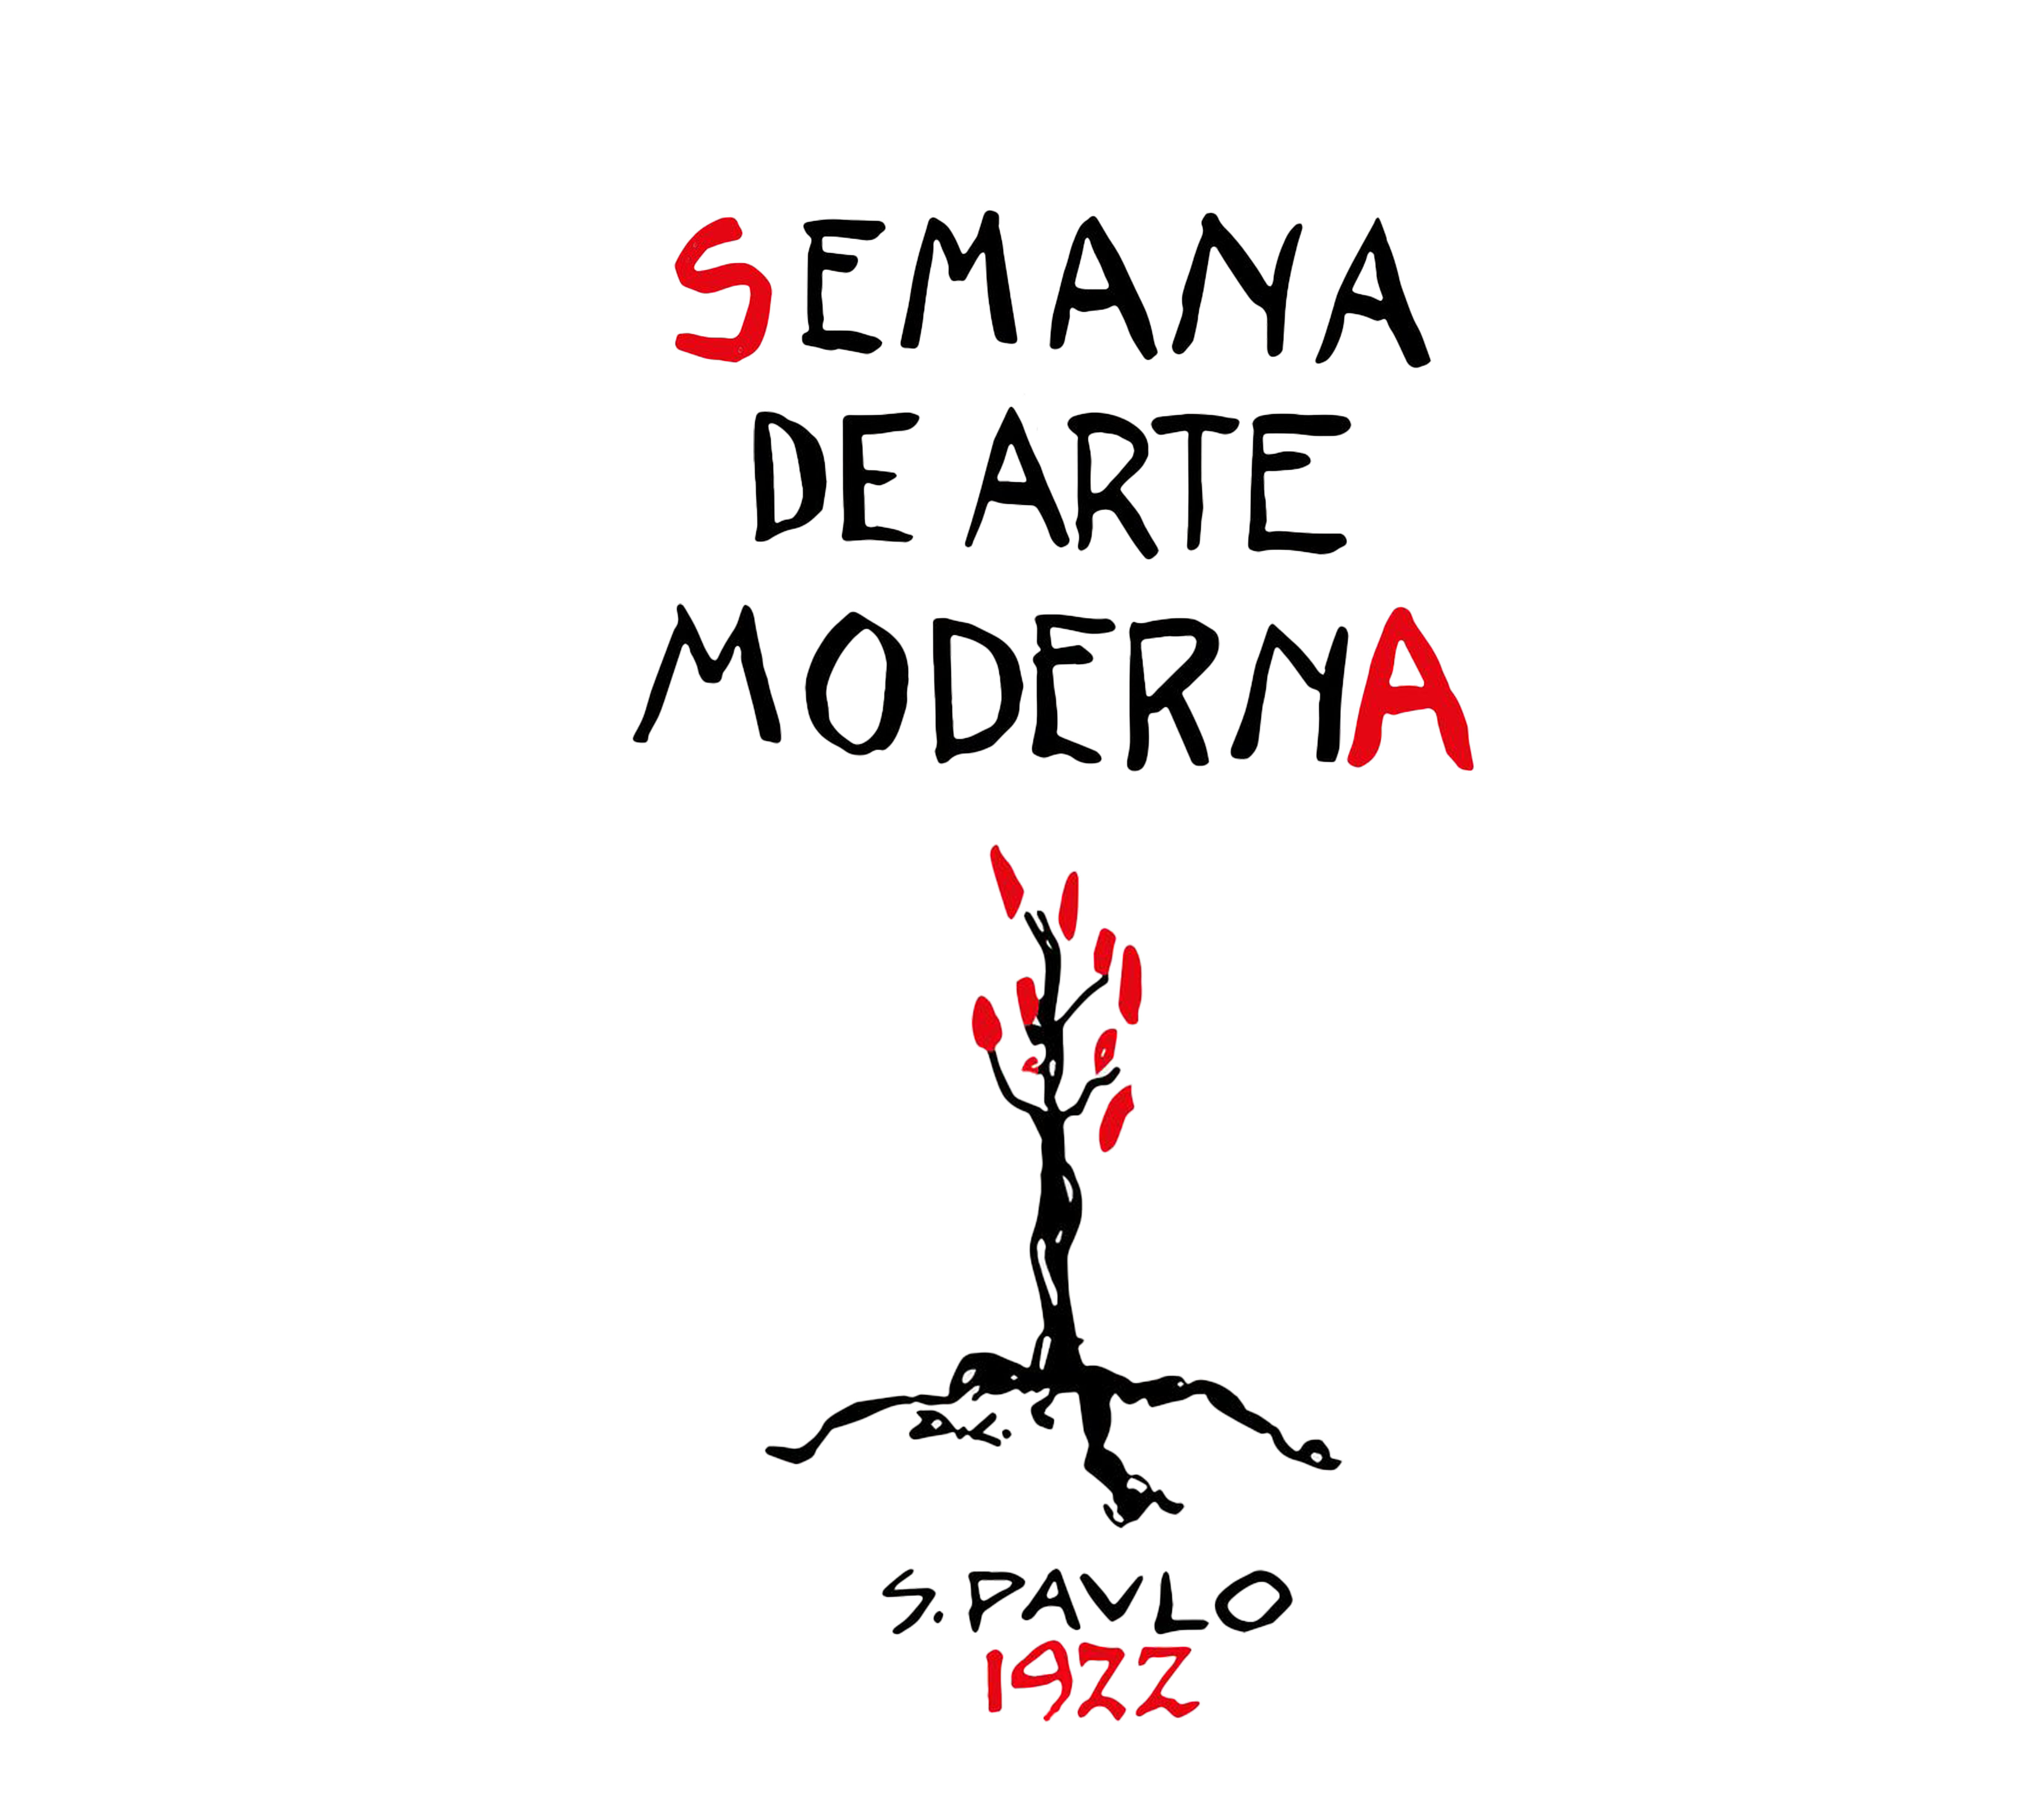 A logo featuring a red and black abstract tree, for Semana de Arte Moderna